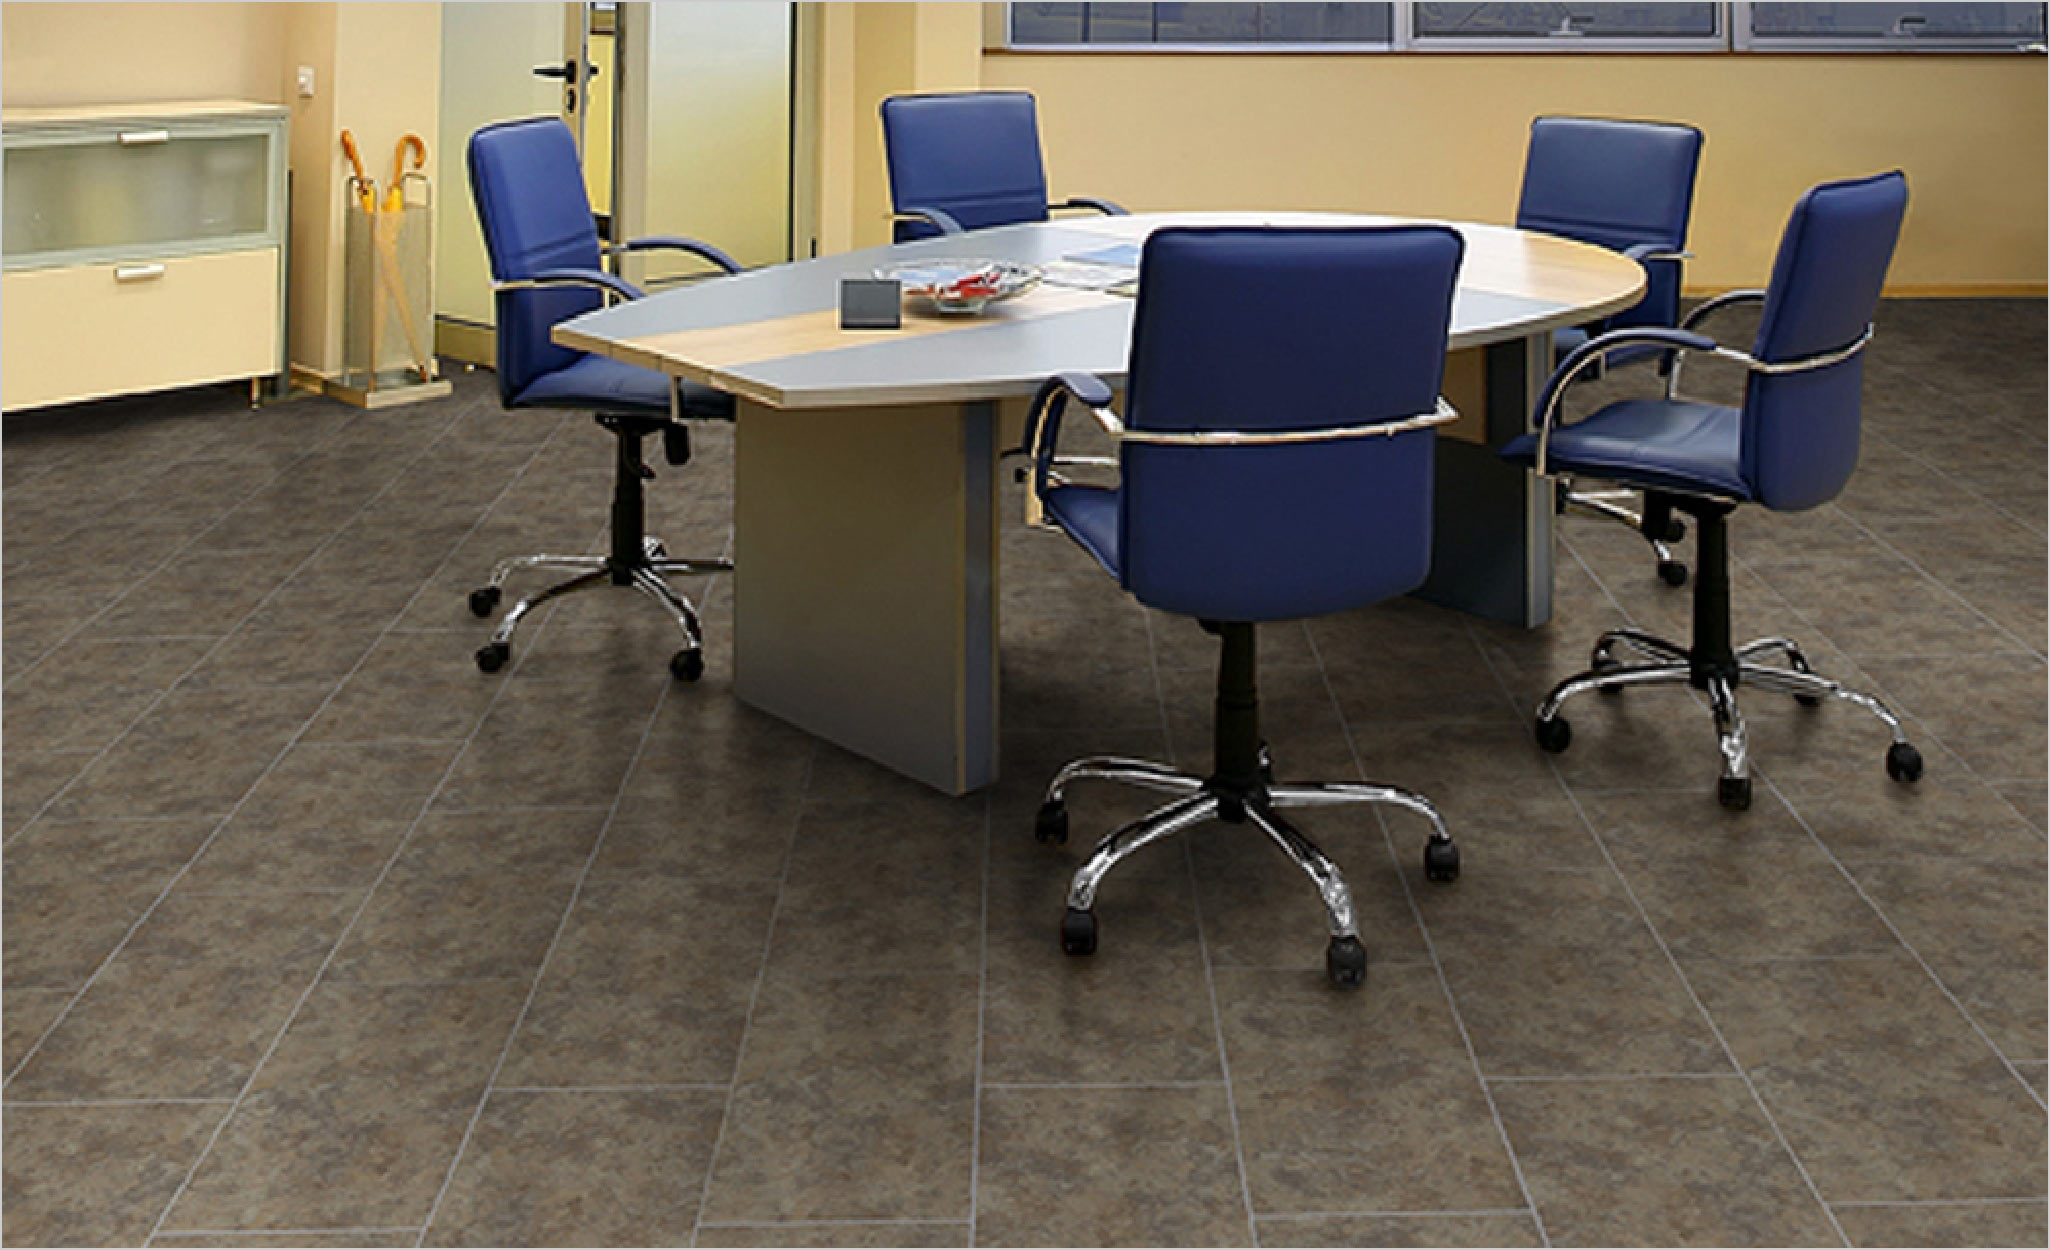 A meeting room with vinyl floor tile.